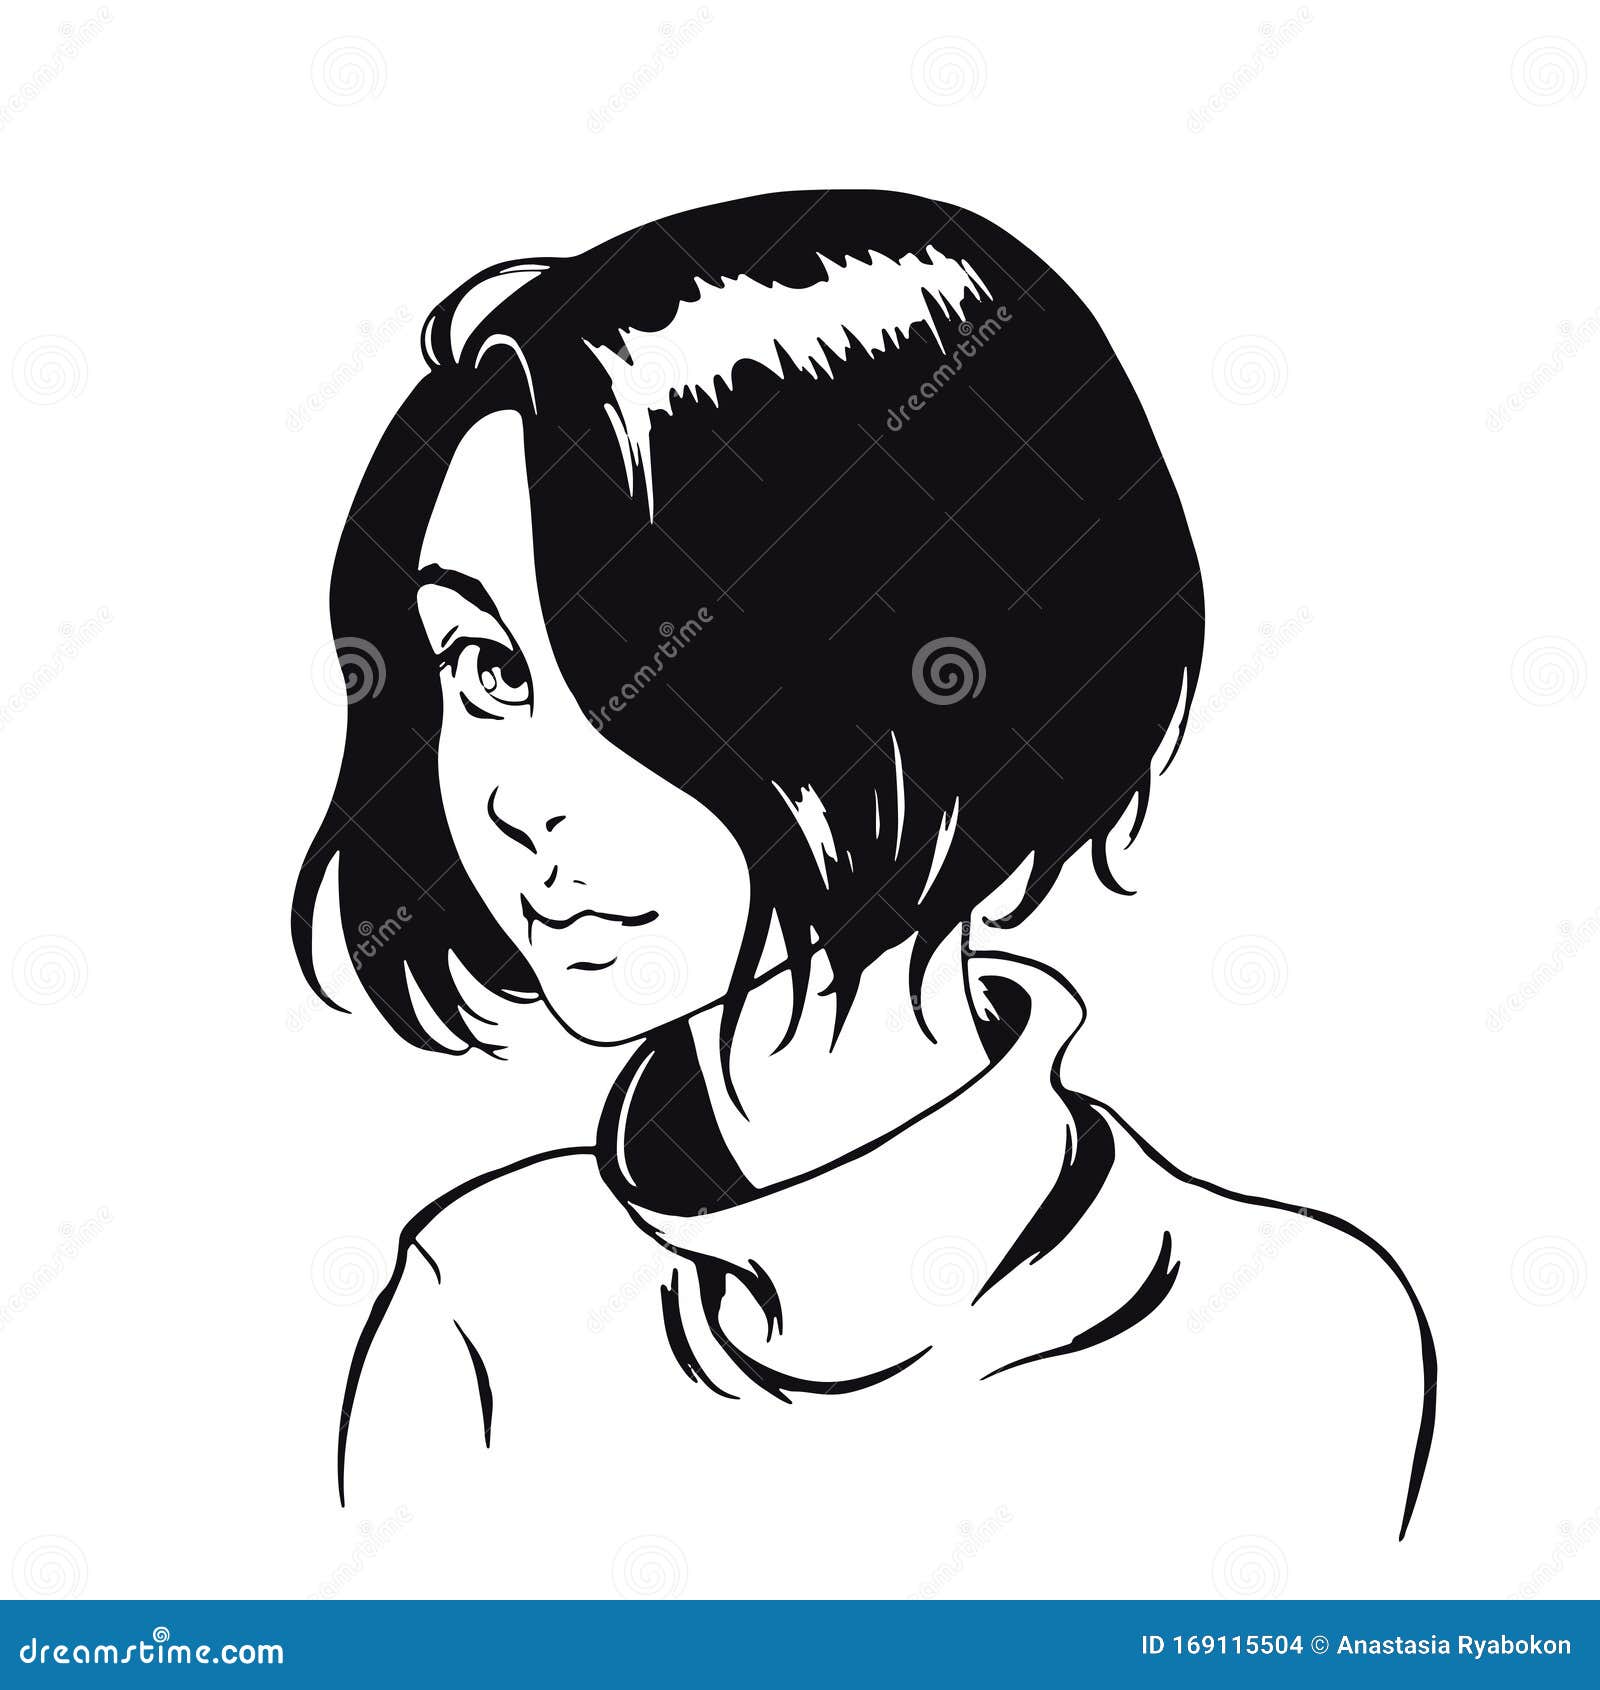 Grafik Illustration Im Comicstil Cute Anime Girl Mit Kurzen Haaren Vektor Abbildung Illustration Von Anime Comicstil